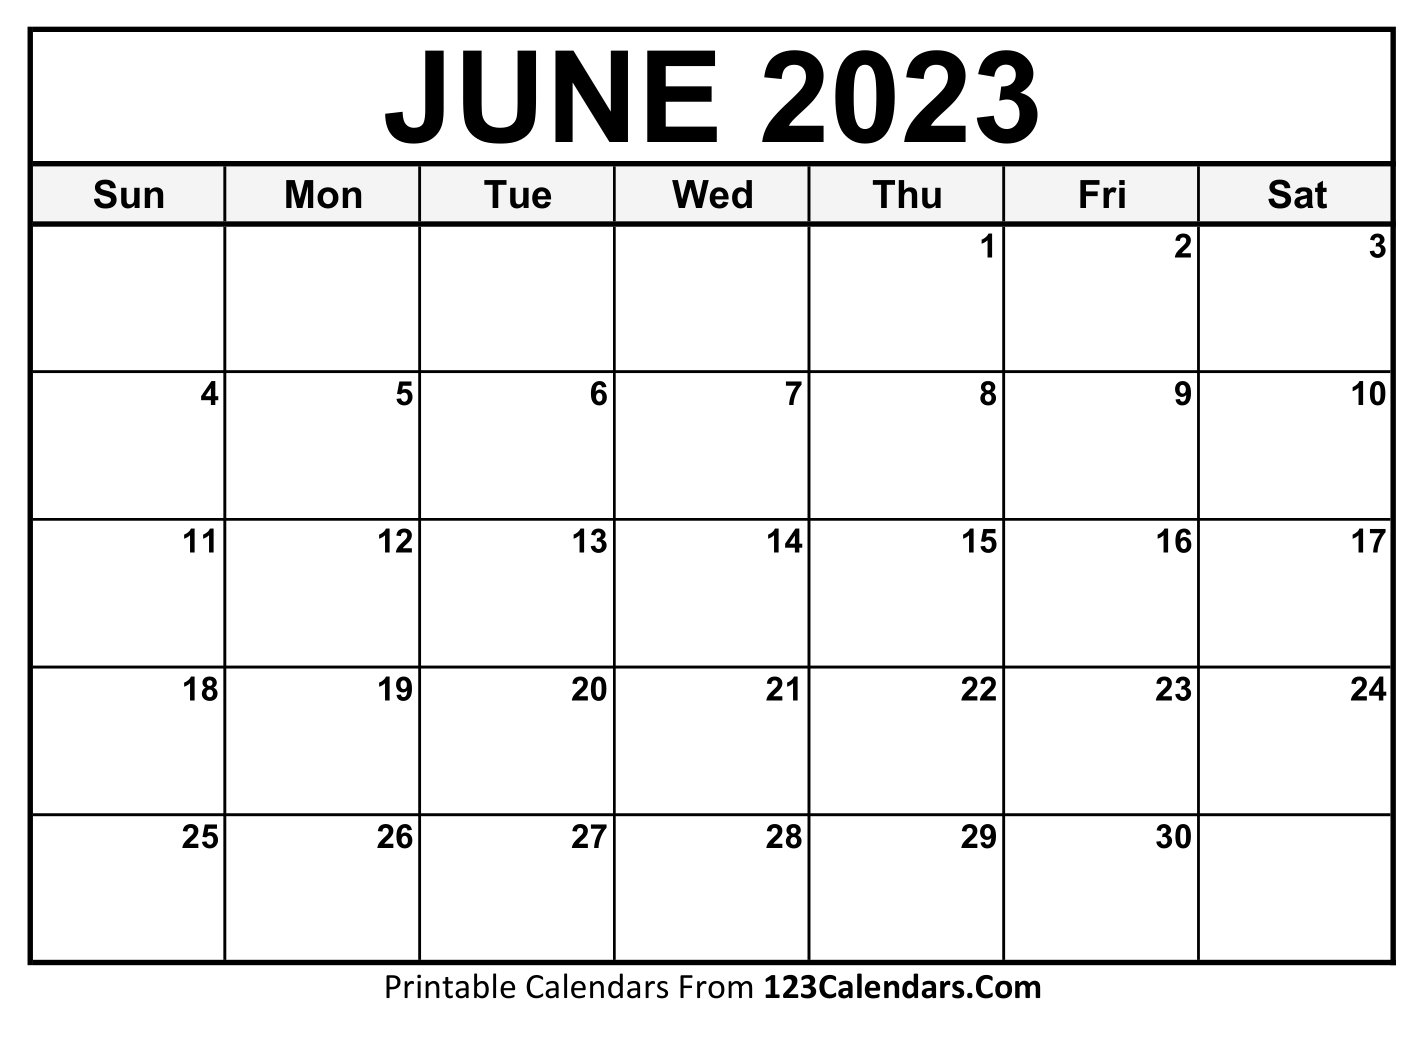 June 2023 Calendars